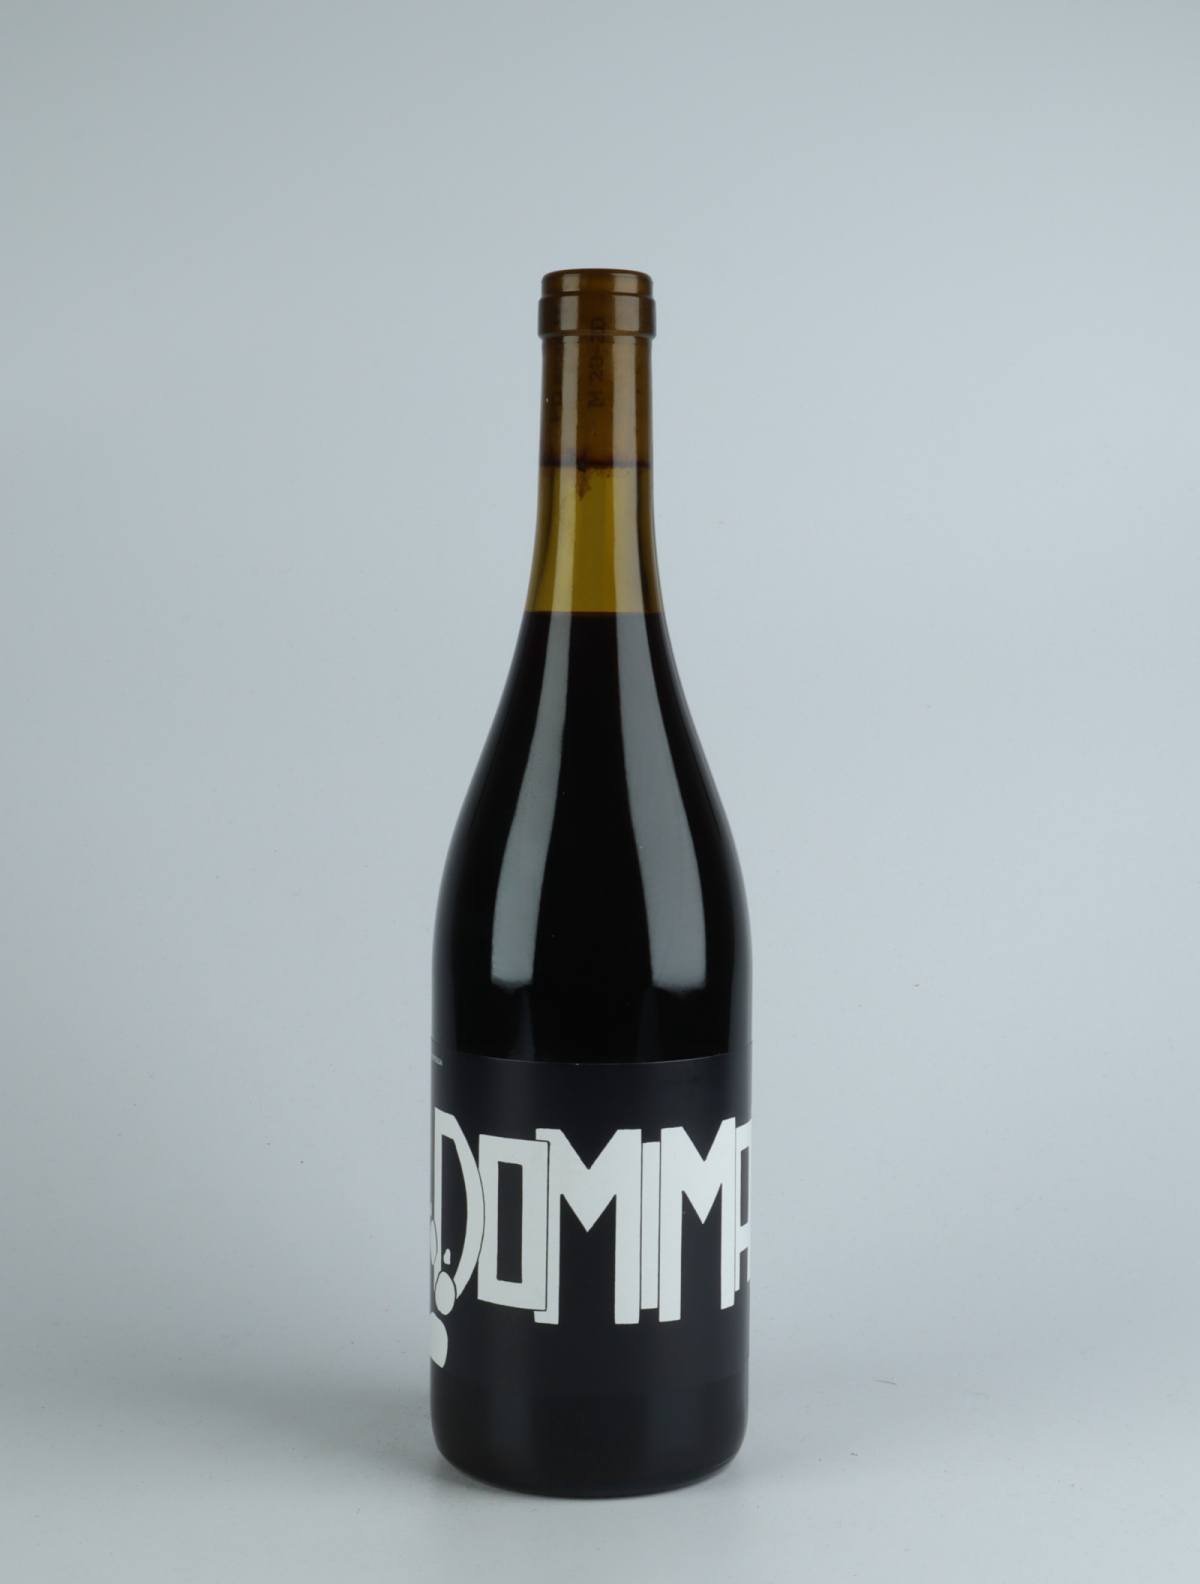 En flaske 2019 Domi Mai Rødvin fra Az. Agr. Farnea di Marco Buratti, Veneto i Italien